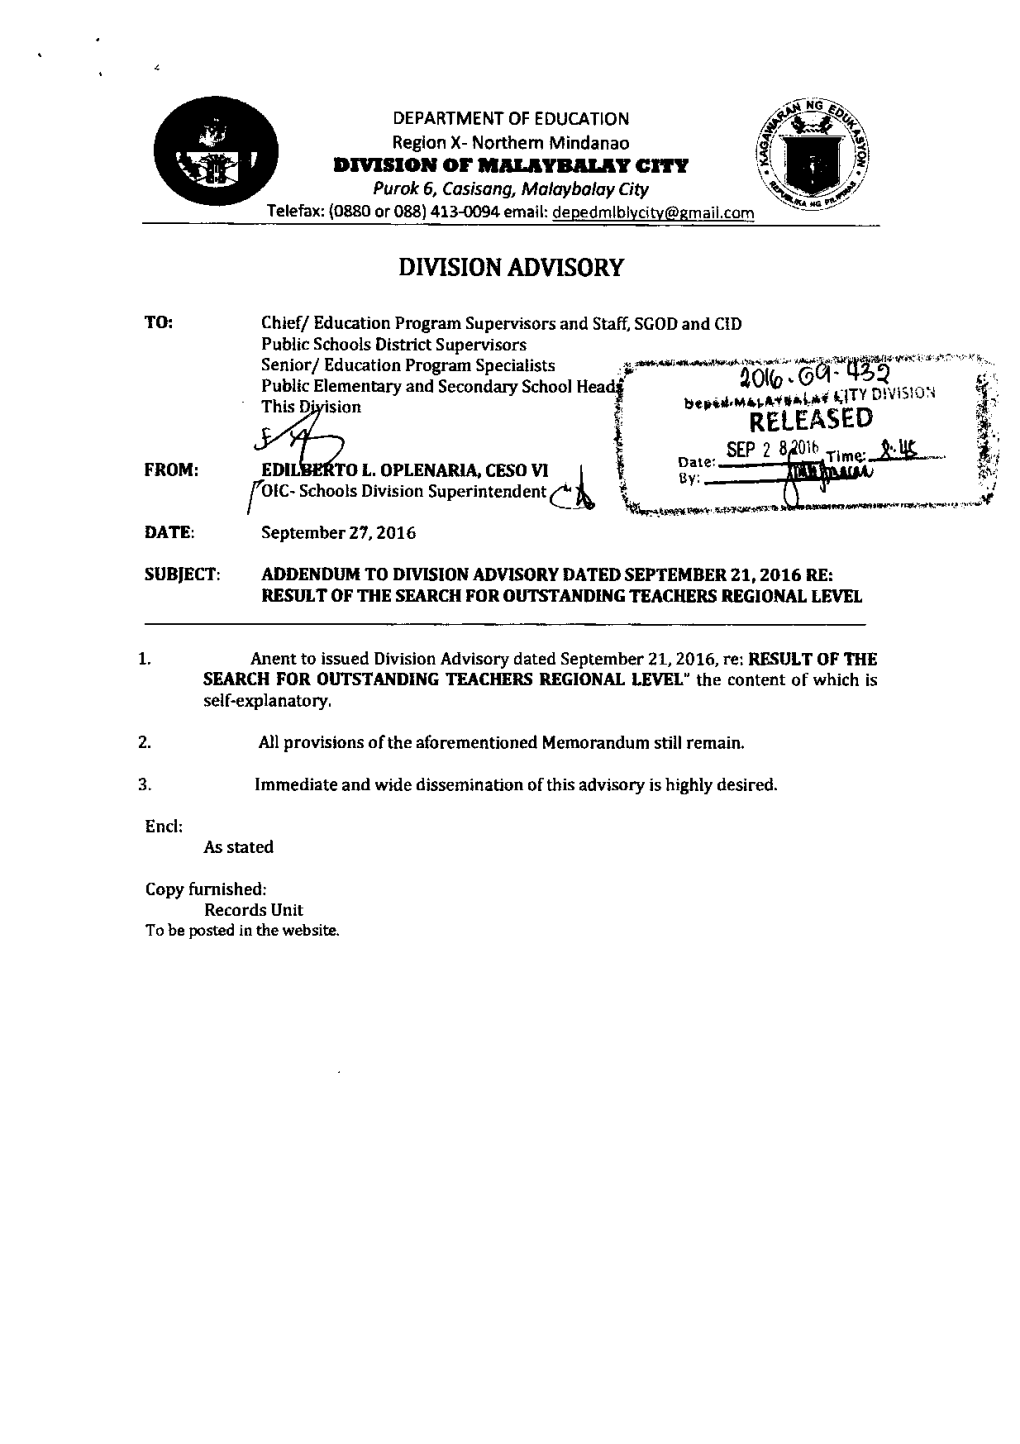 Addendum to Division Advisory Dated September 21, 2016 Re